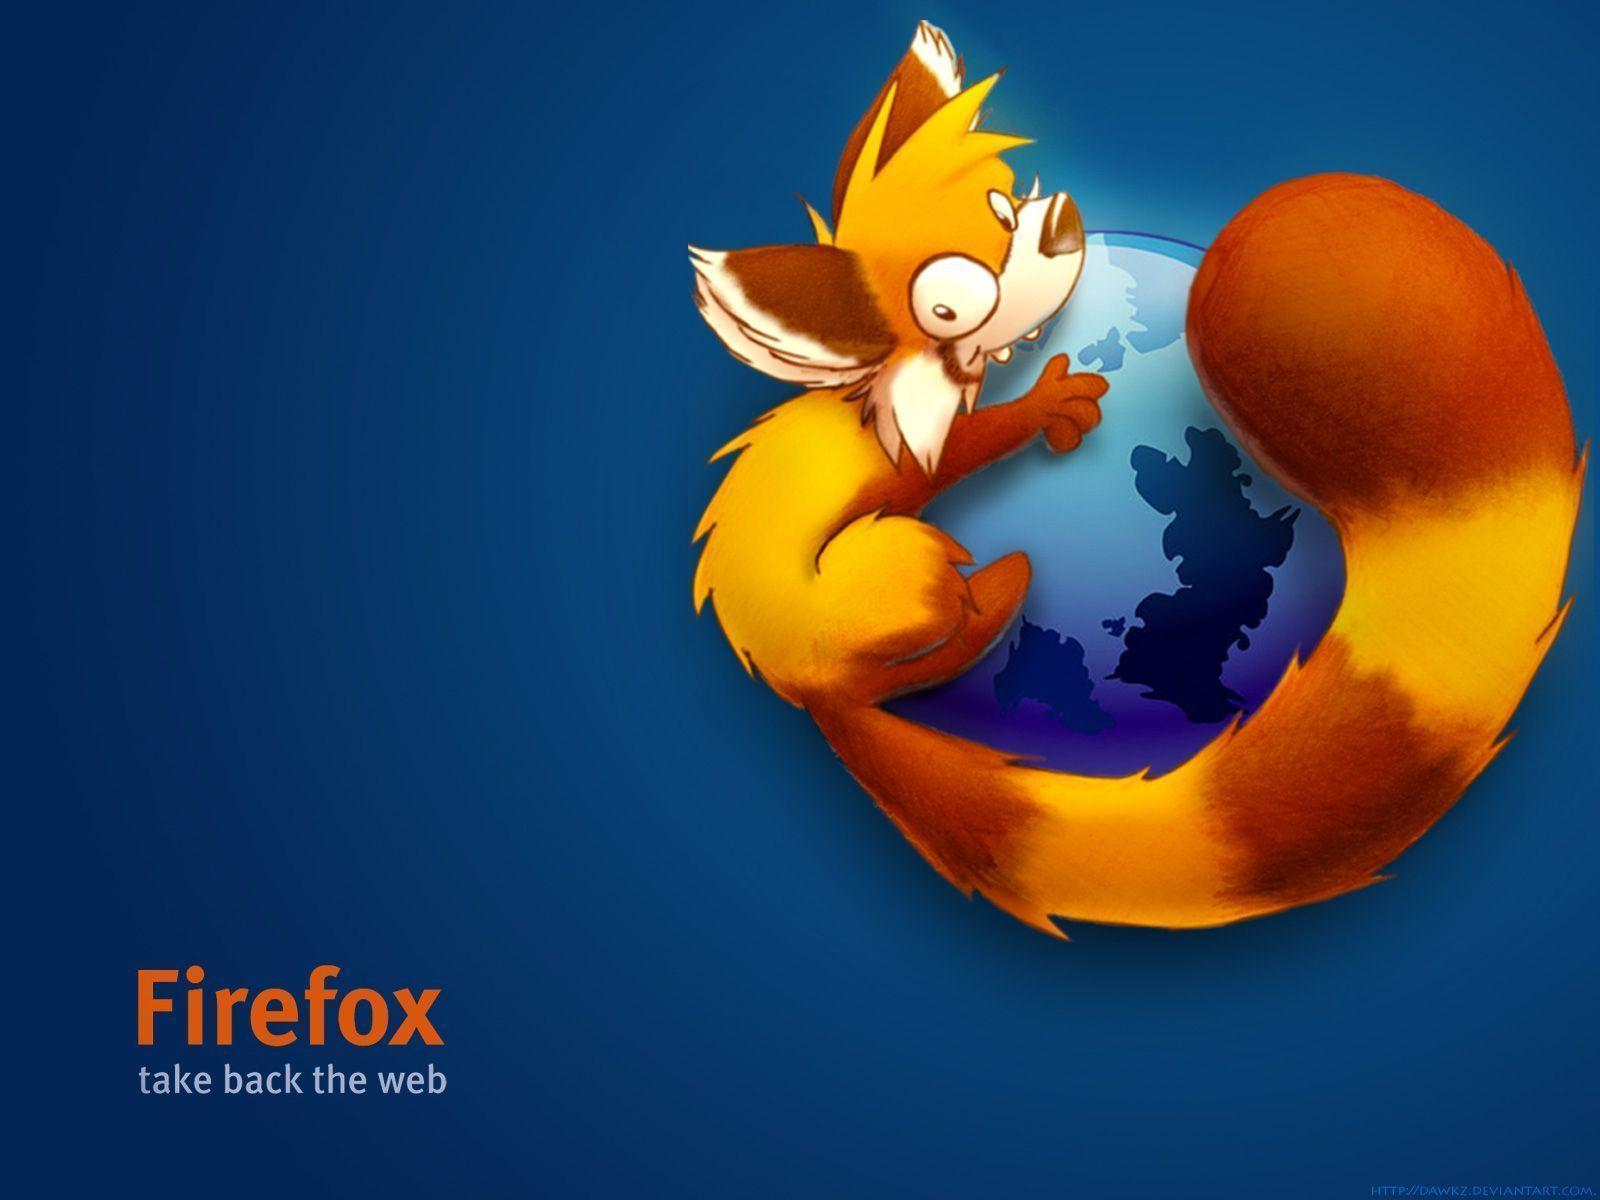 Firefox Wallpaper HD Download. kichiwall